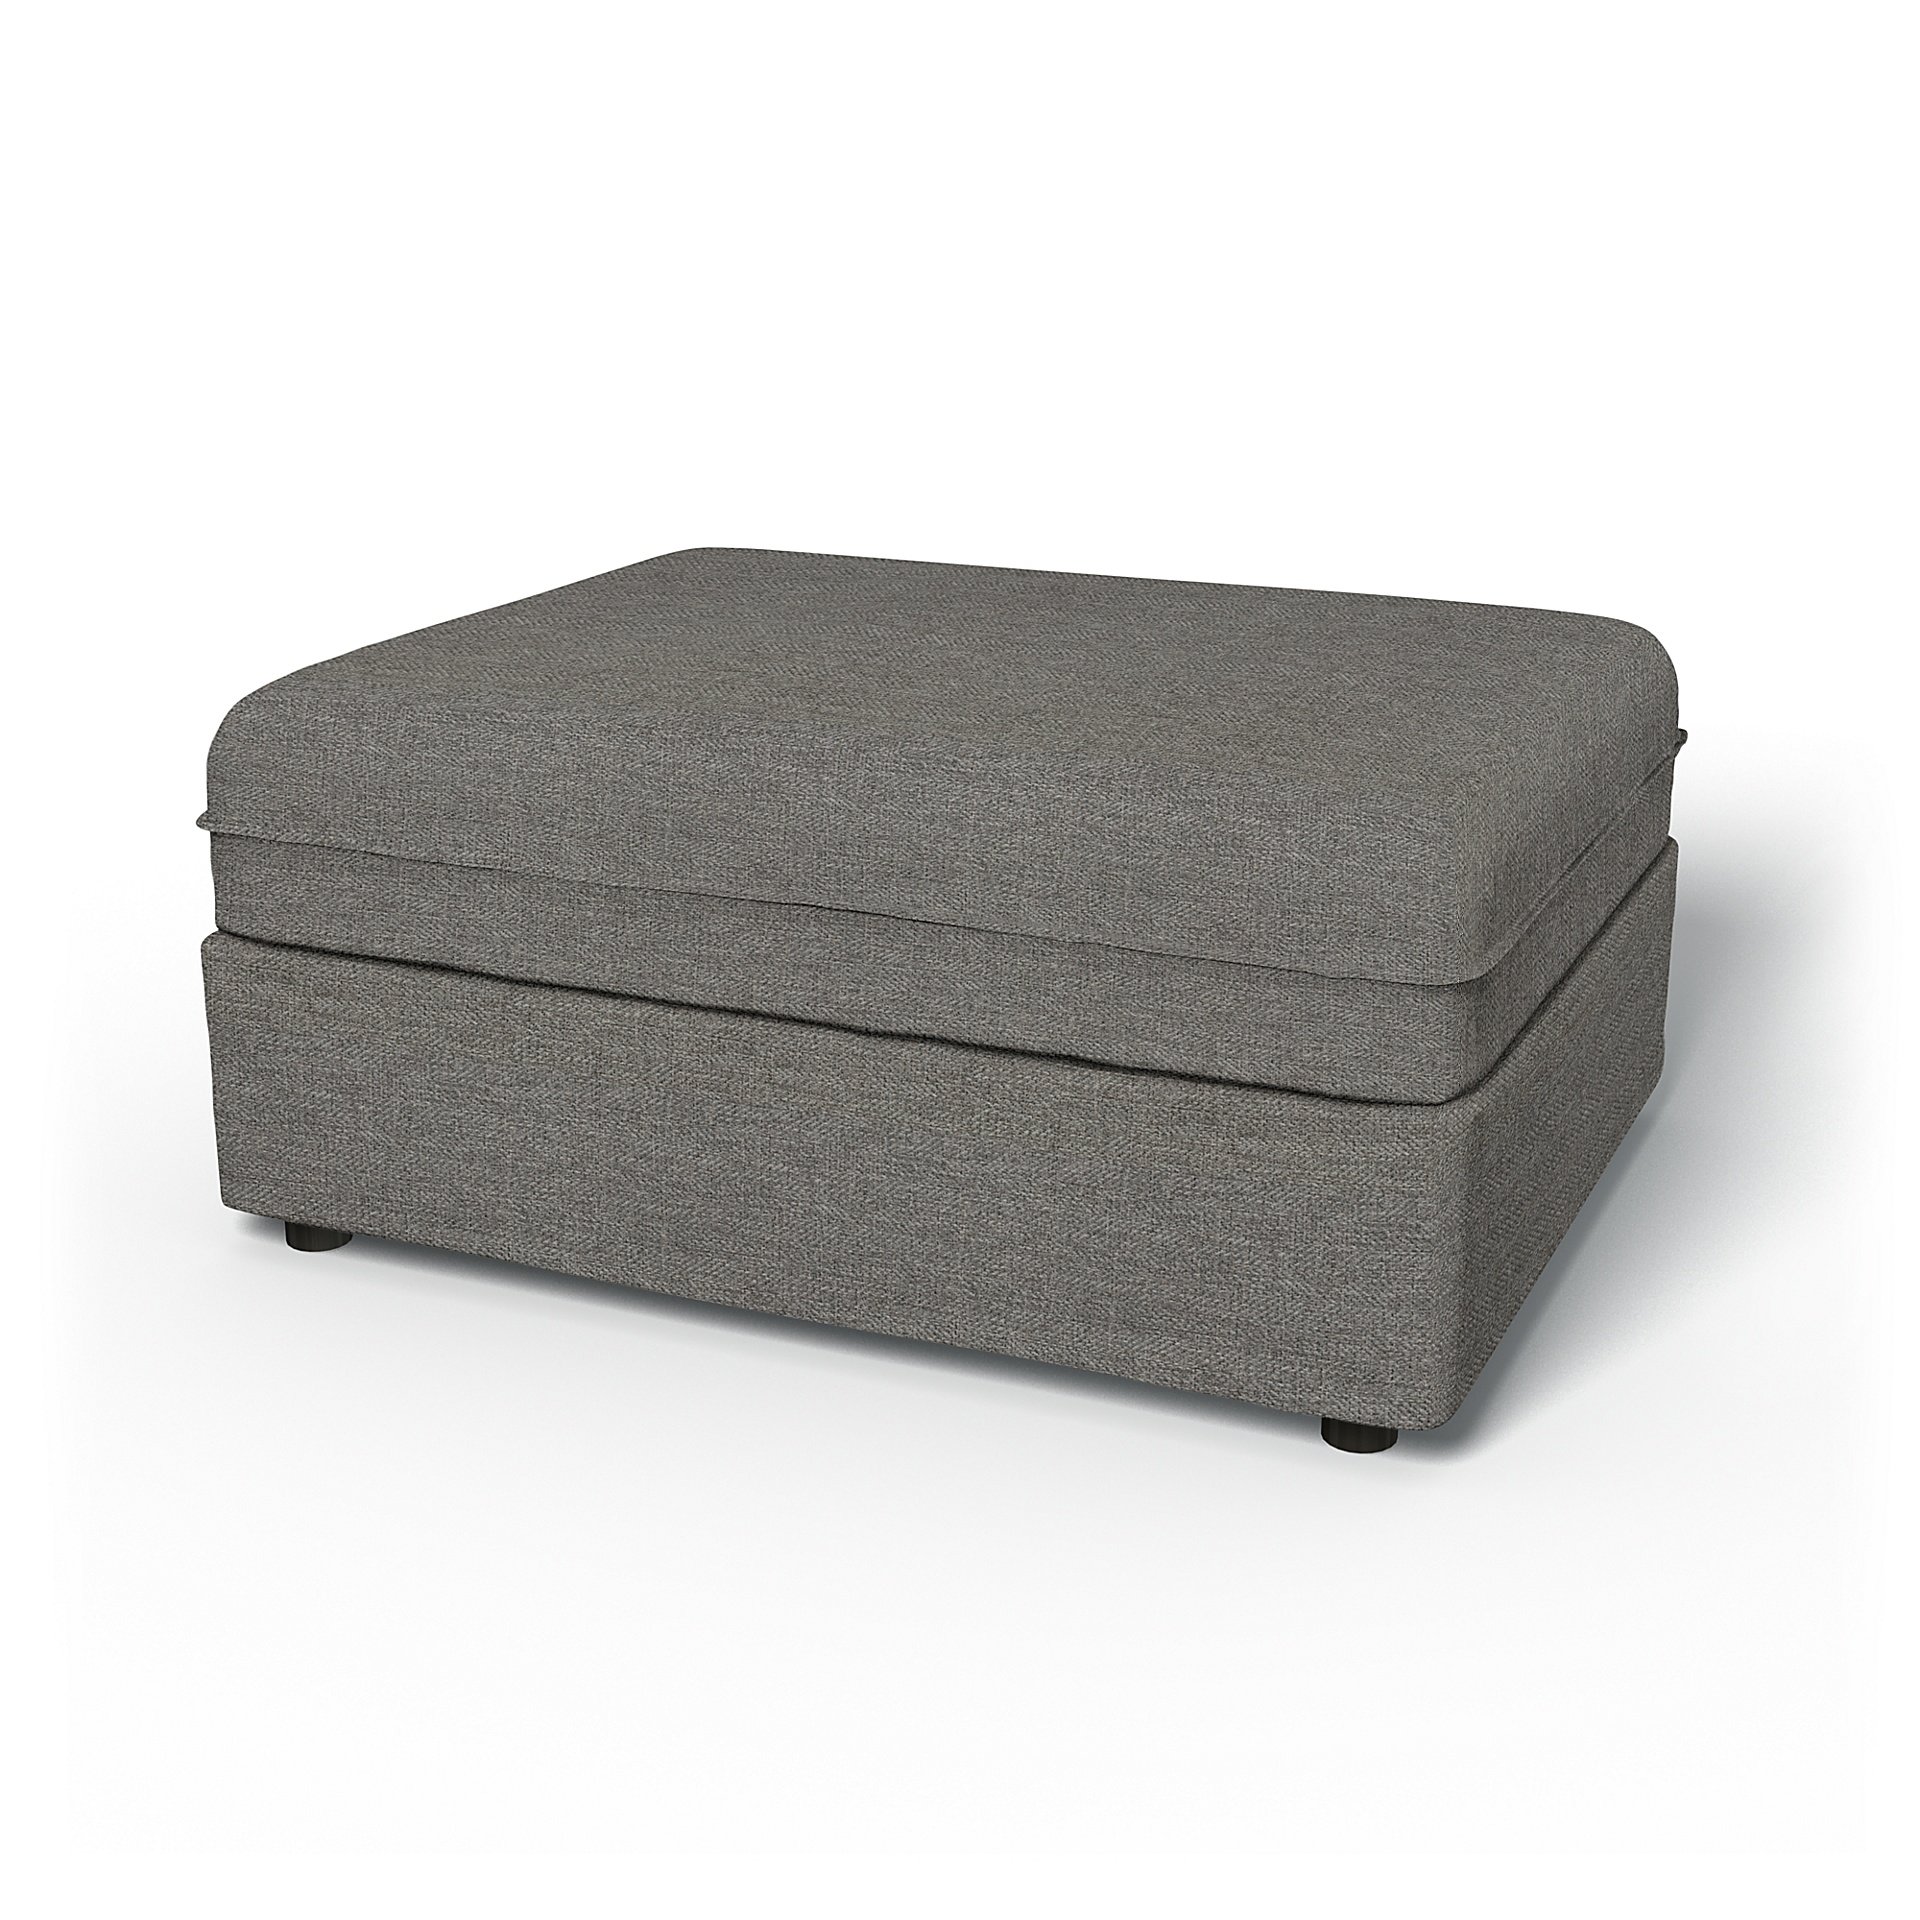 IKEA - Vallentuna Seat Module Cover 100x80cm 39x32in, Taupe, Boucle & Texture - Bemz